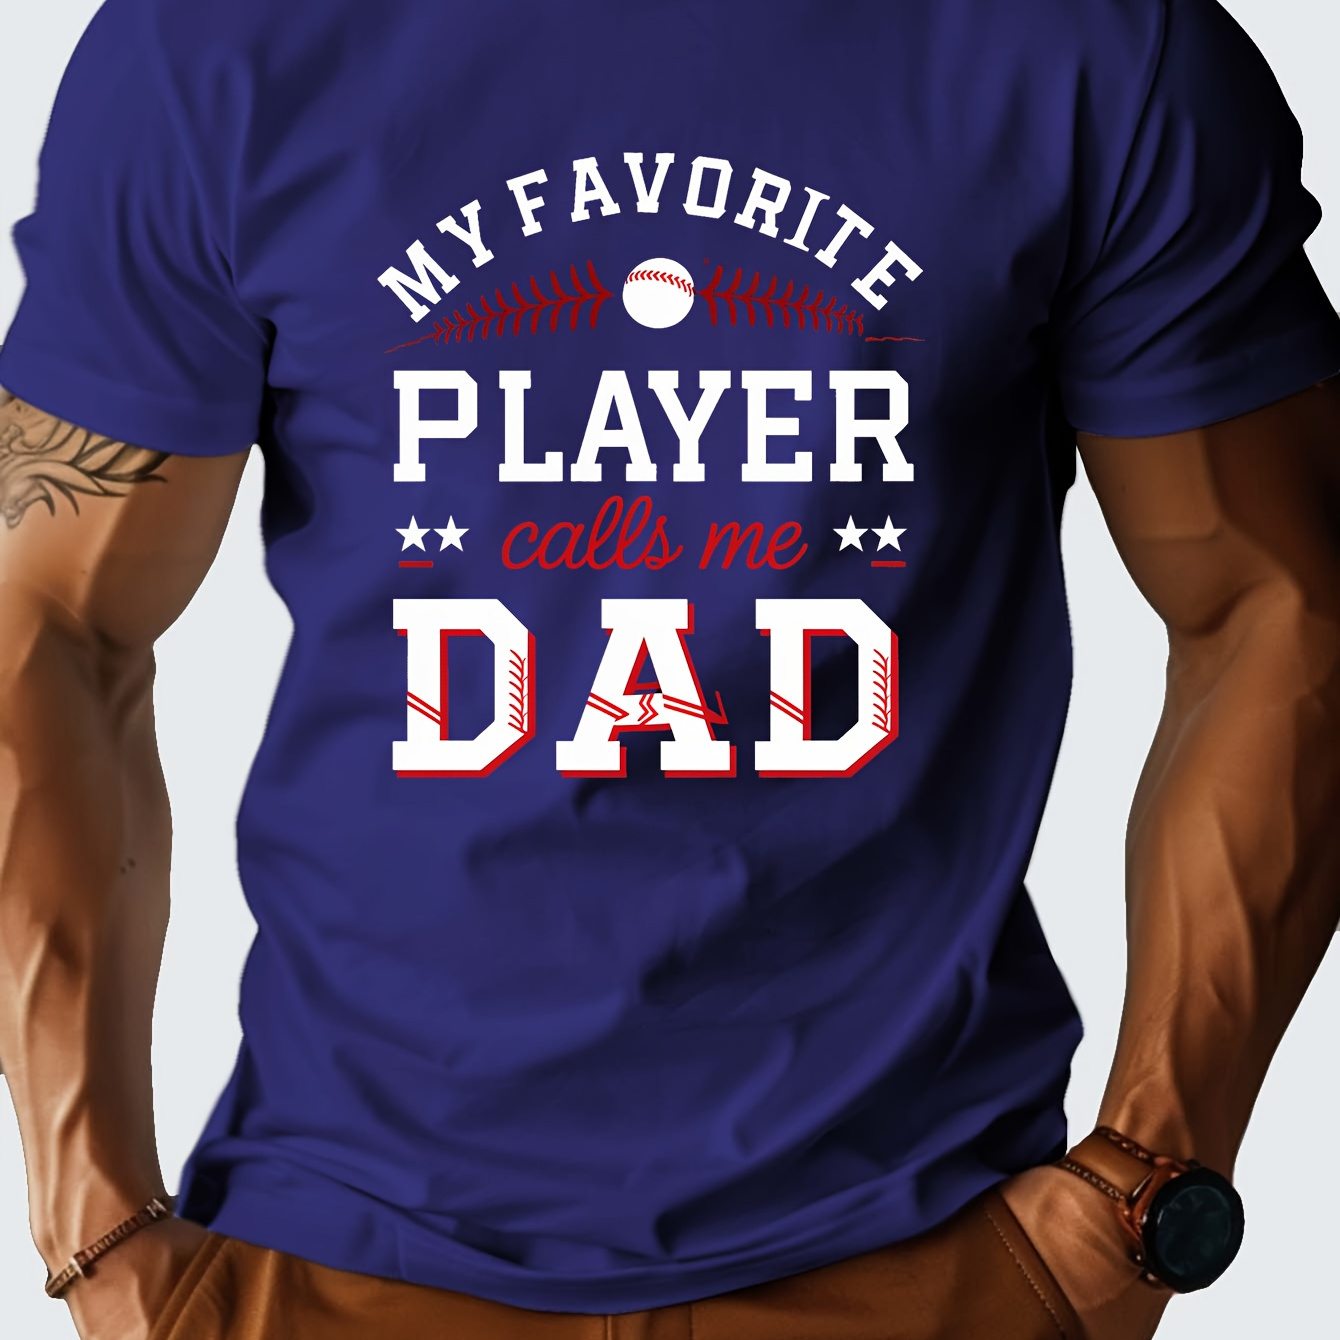 

Dad Baseball G500 Pure Cotton Men's T-shirt Comfort Fit